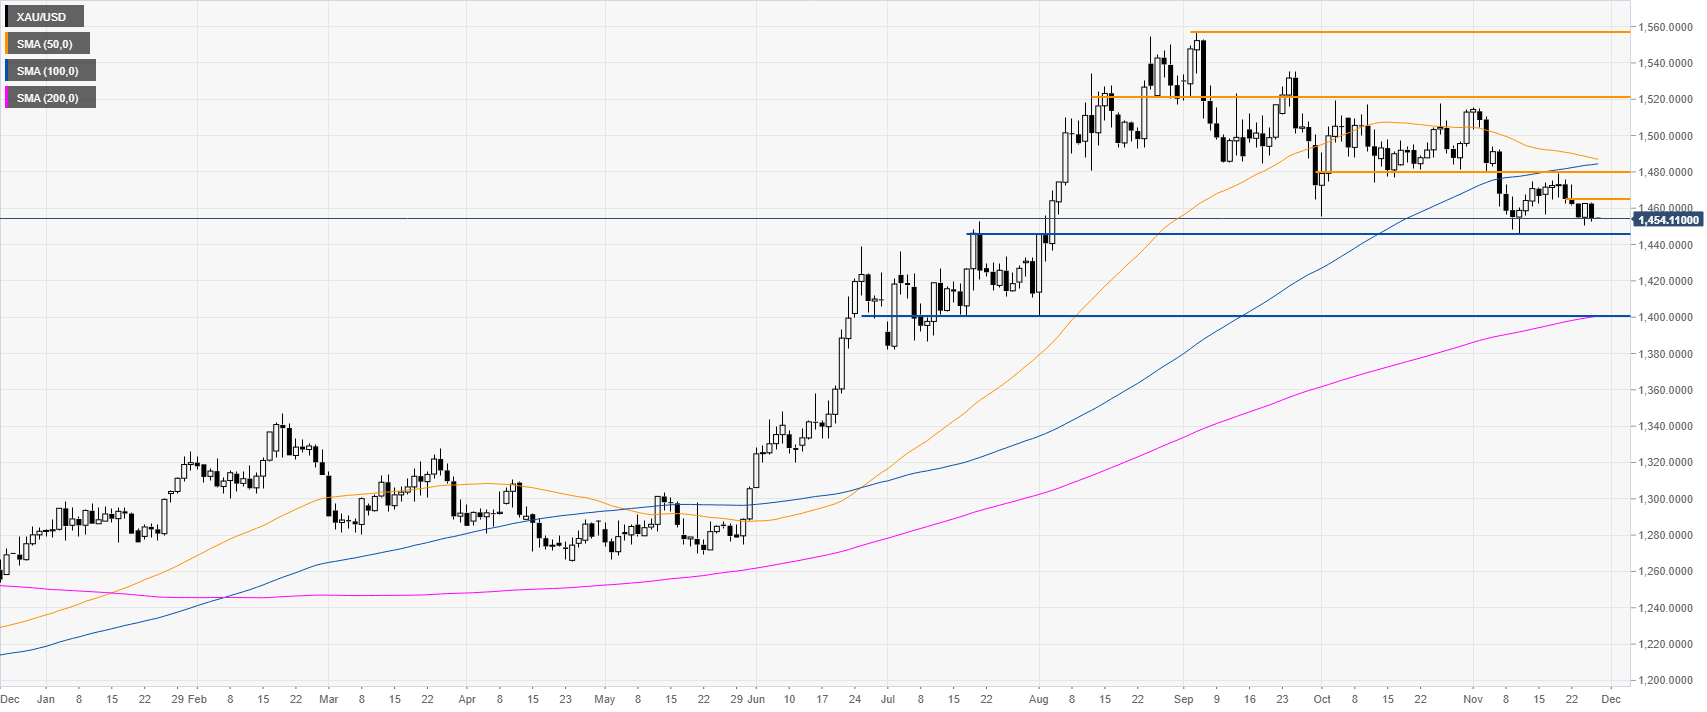 Hk Gold Price Chart